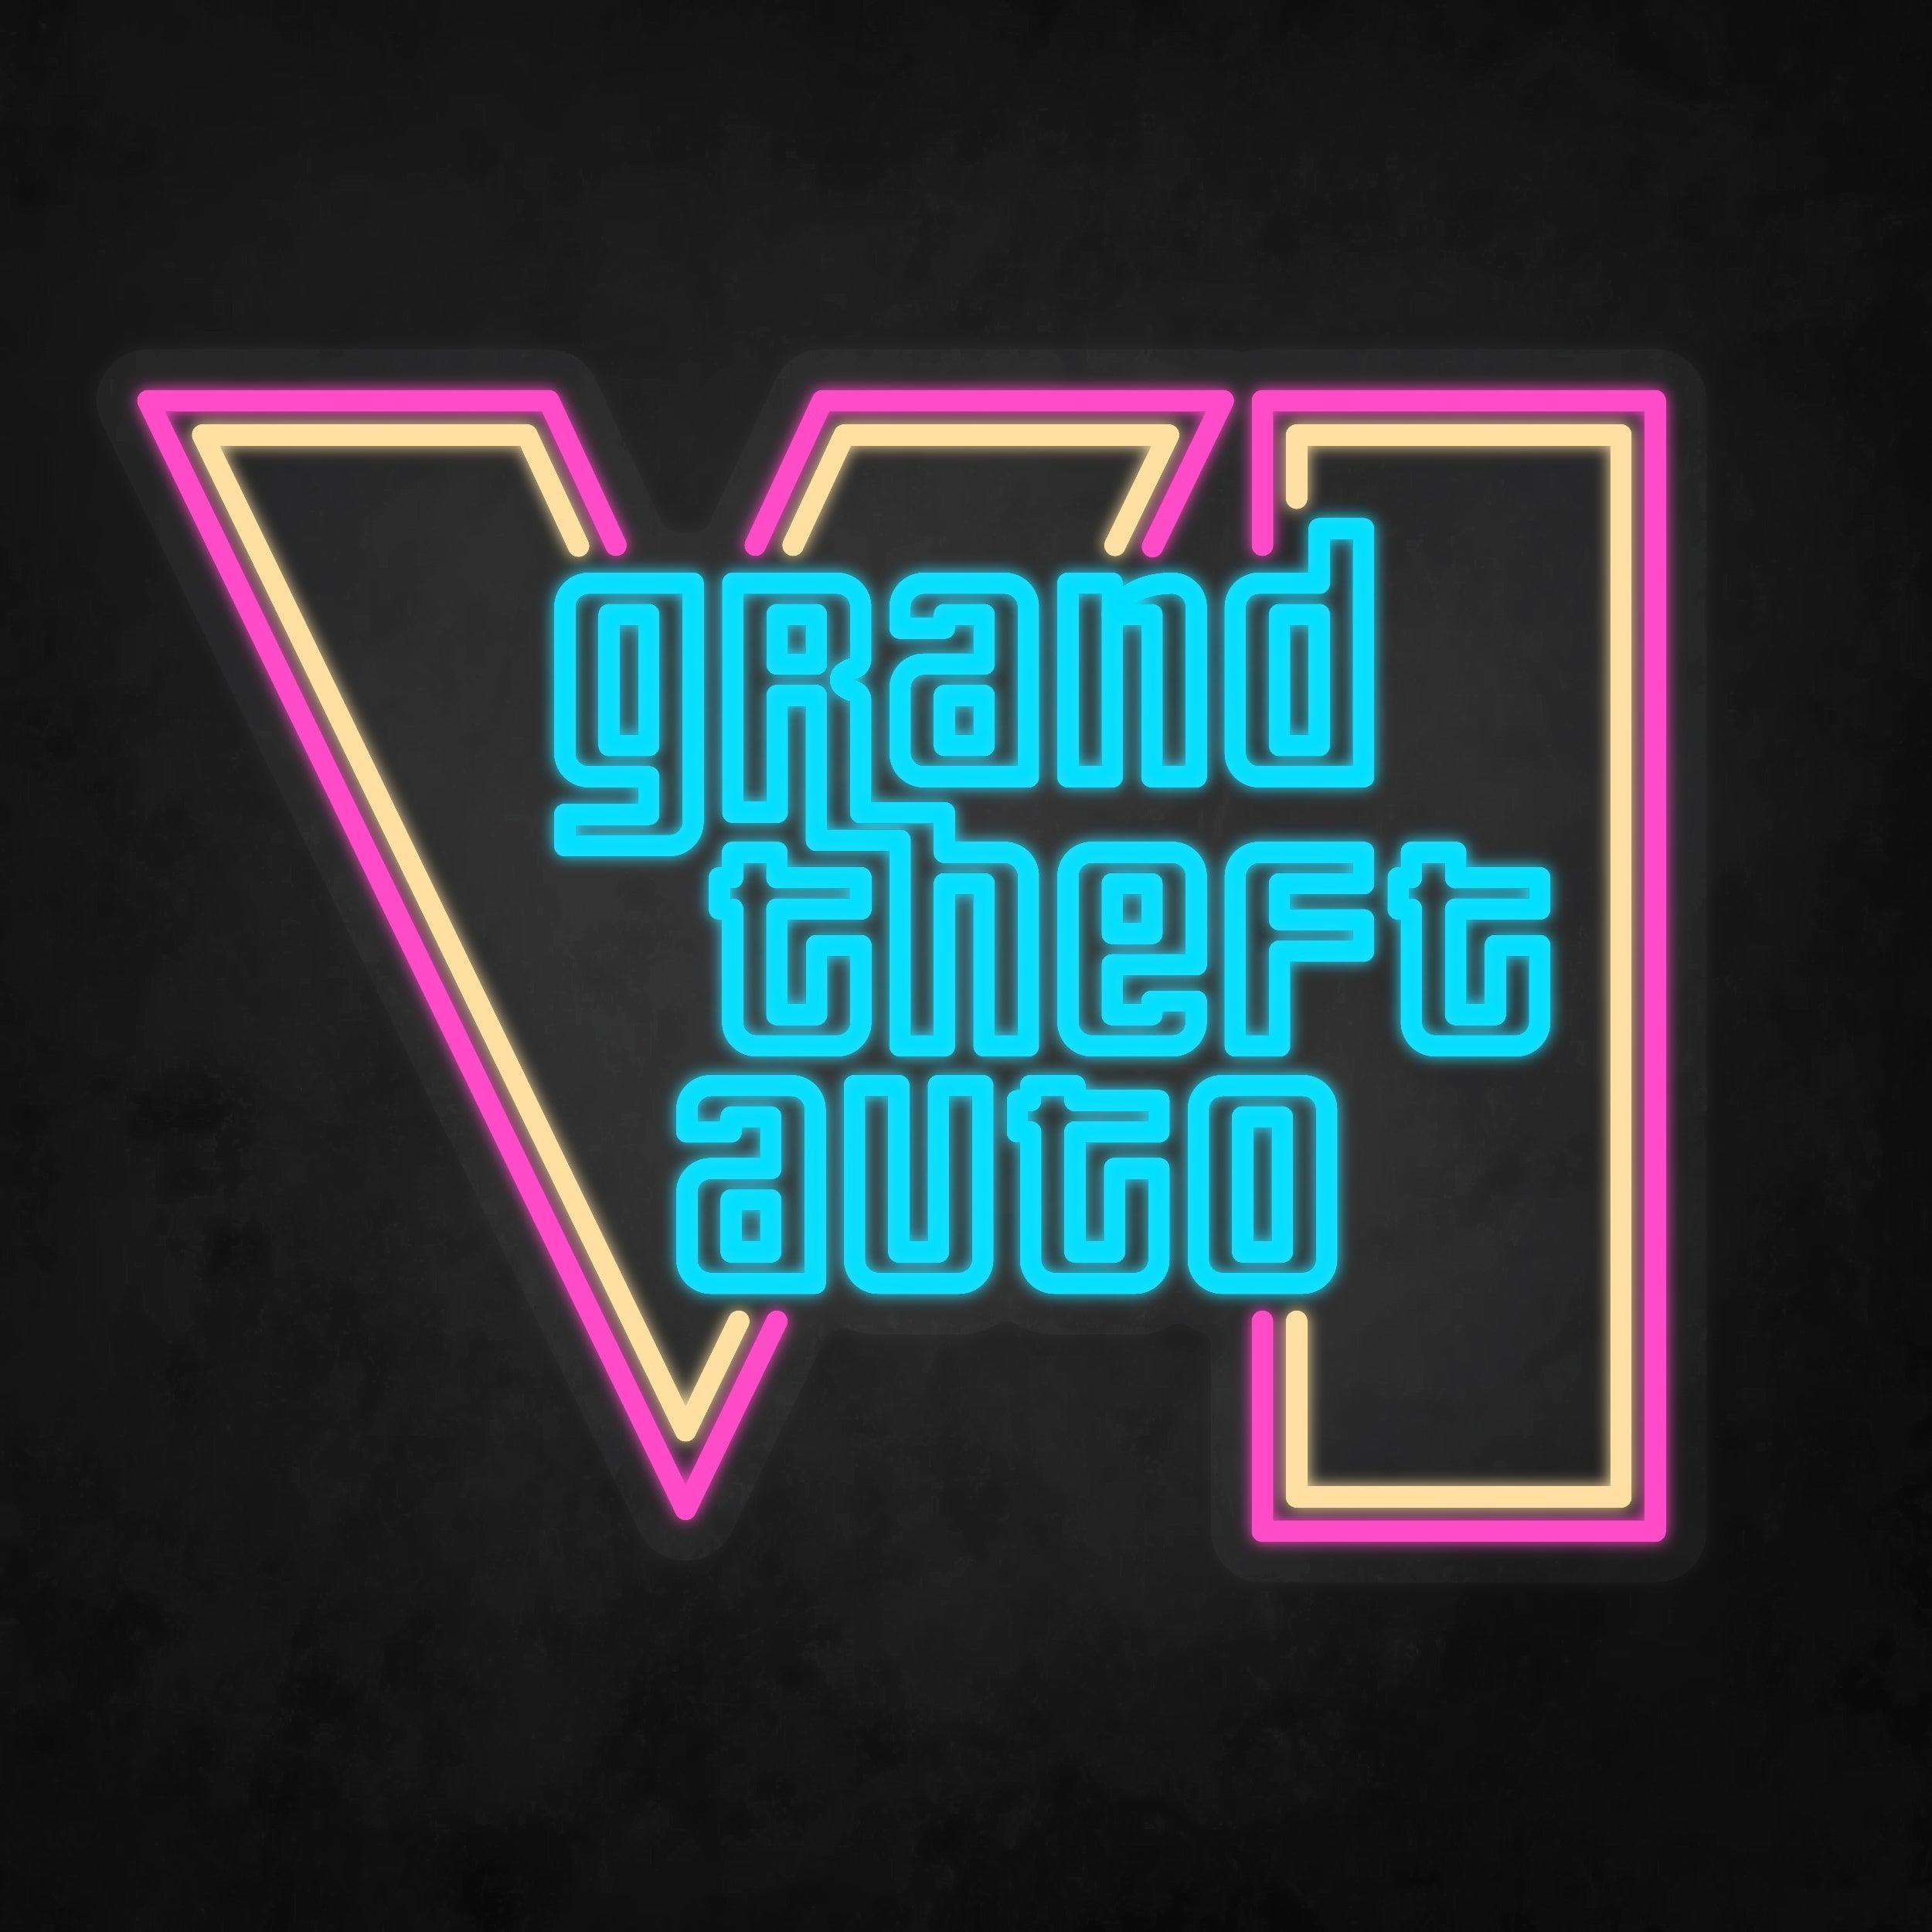 LED Neon Sign - Grand Theft Auto - GTA 6 - Neonbir